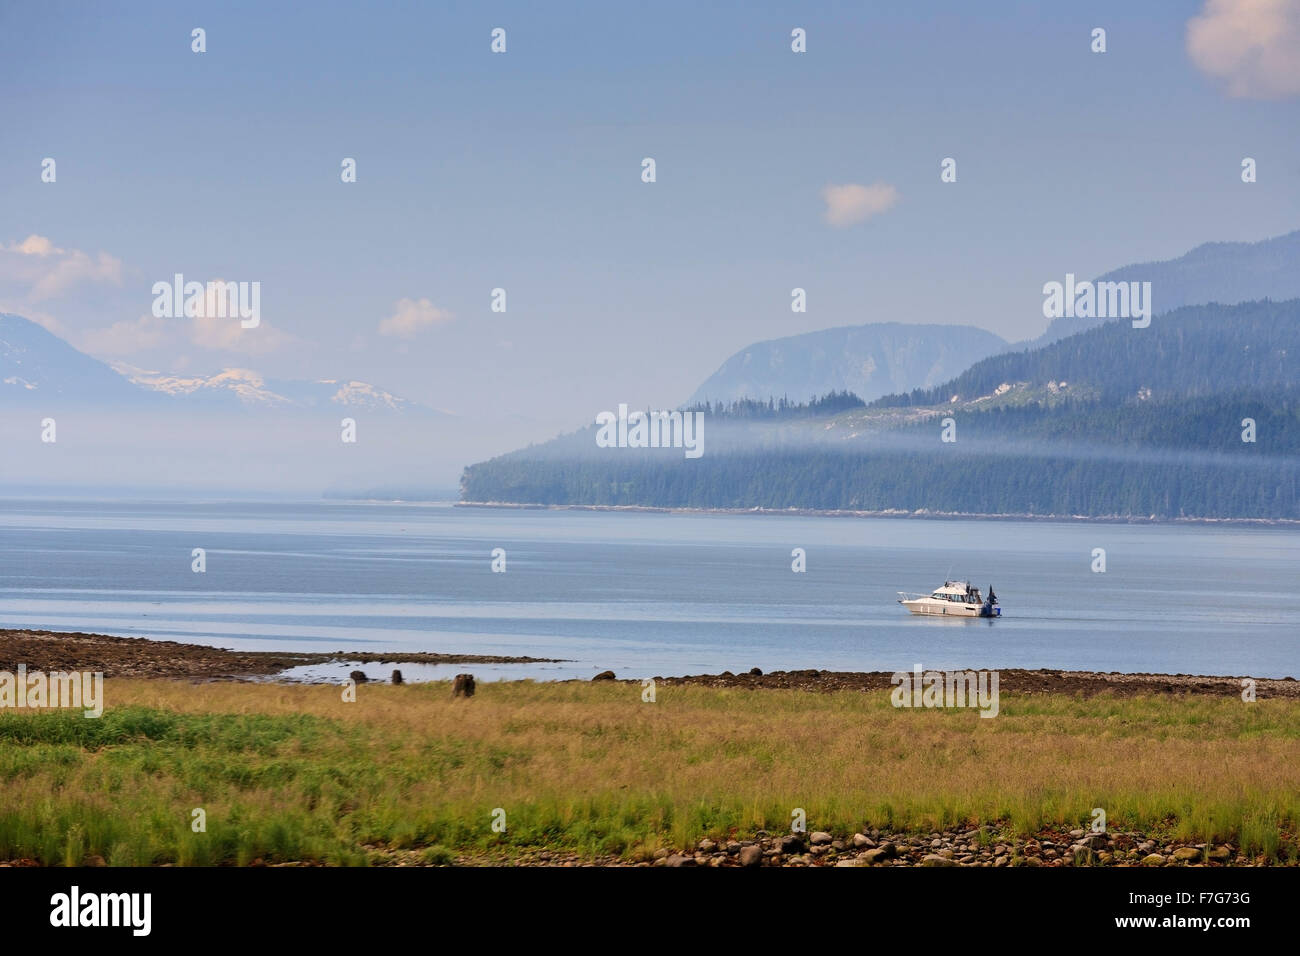 Boat salmon fishing in Douglas Channel by Kitimaat Village, Kitimat, British Columbia Stock Photo